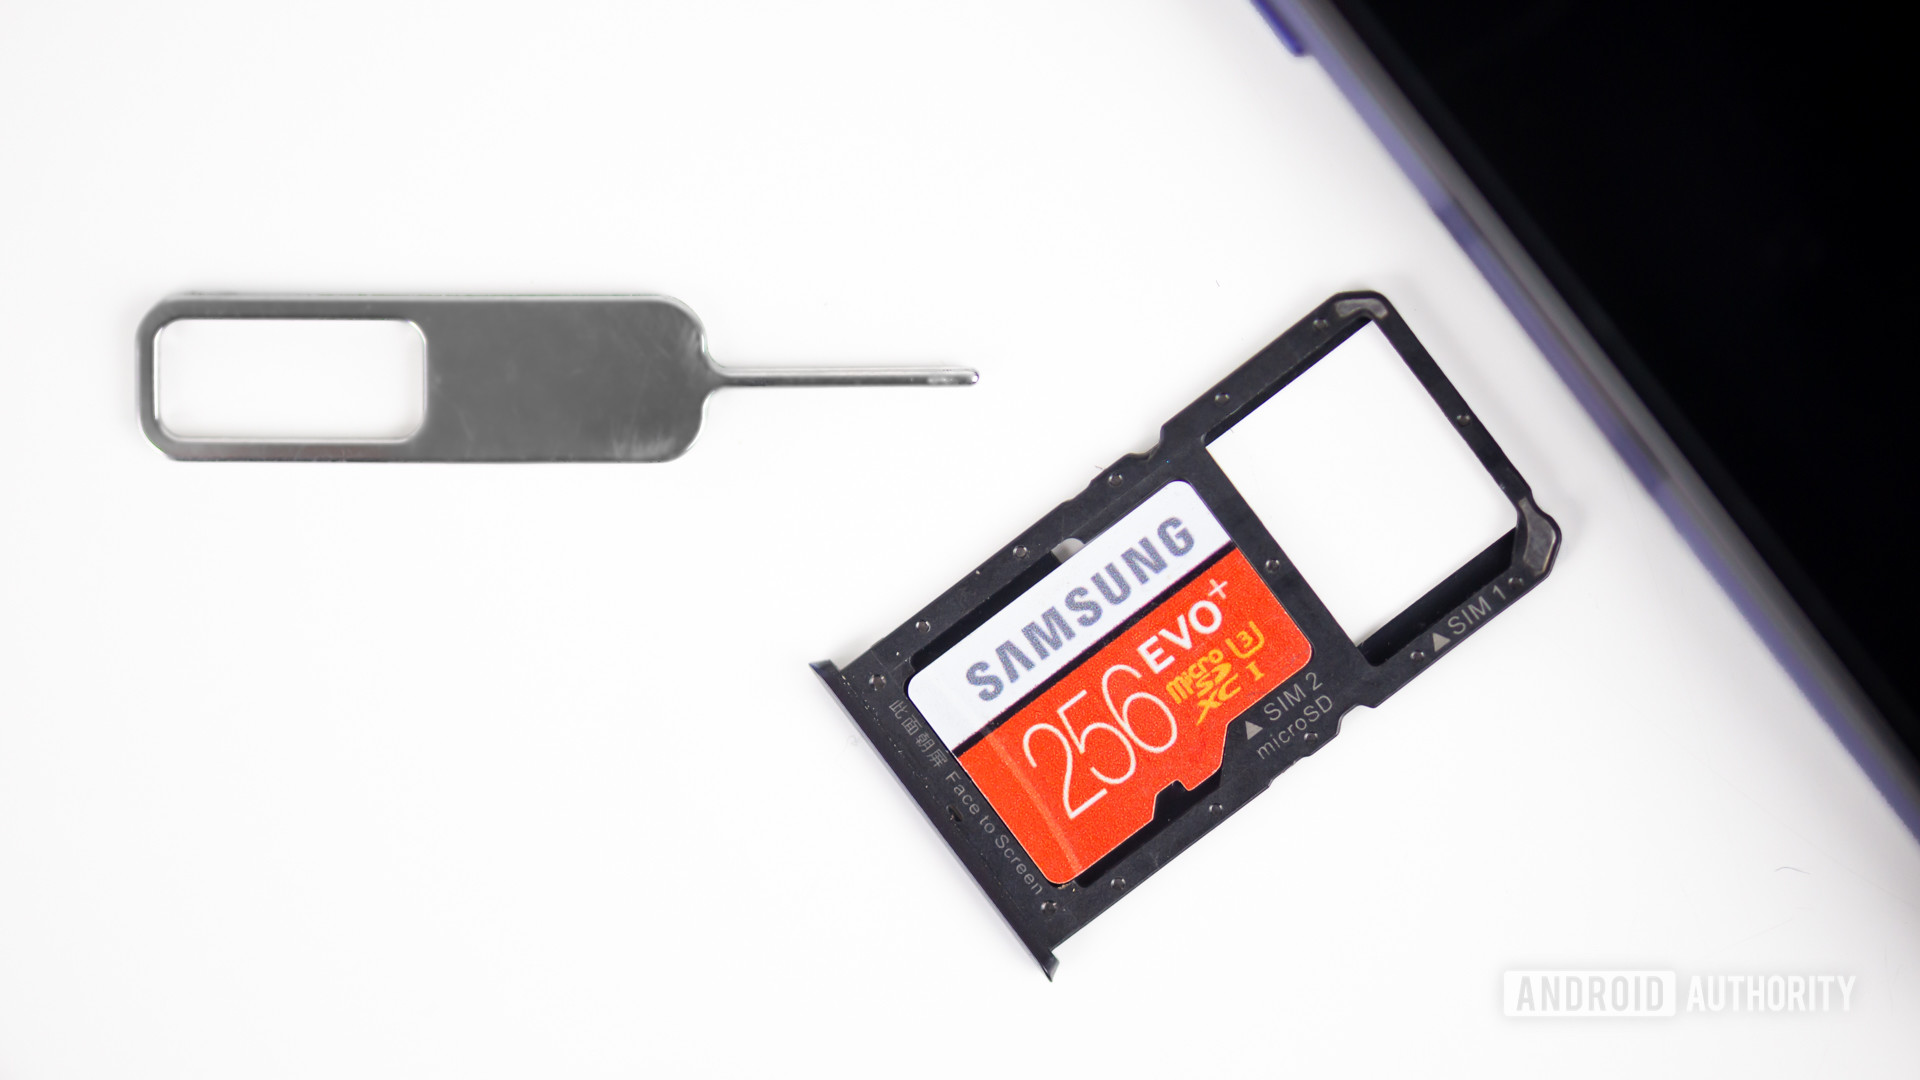 MicroSD card slot stock photo 5 - Photography Essentials. 